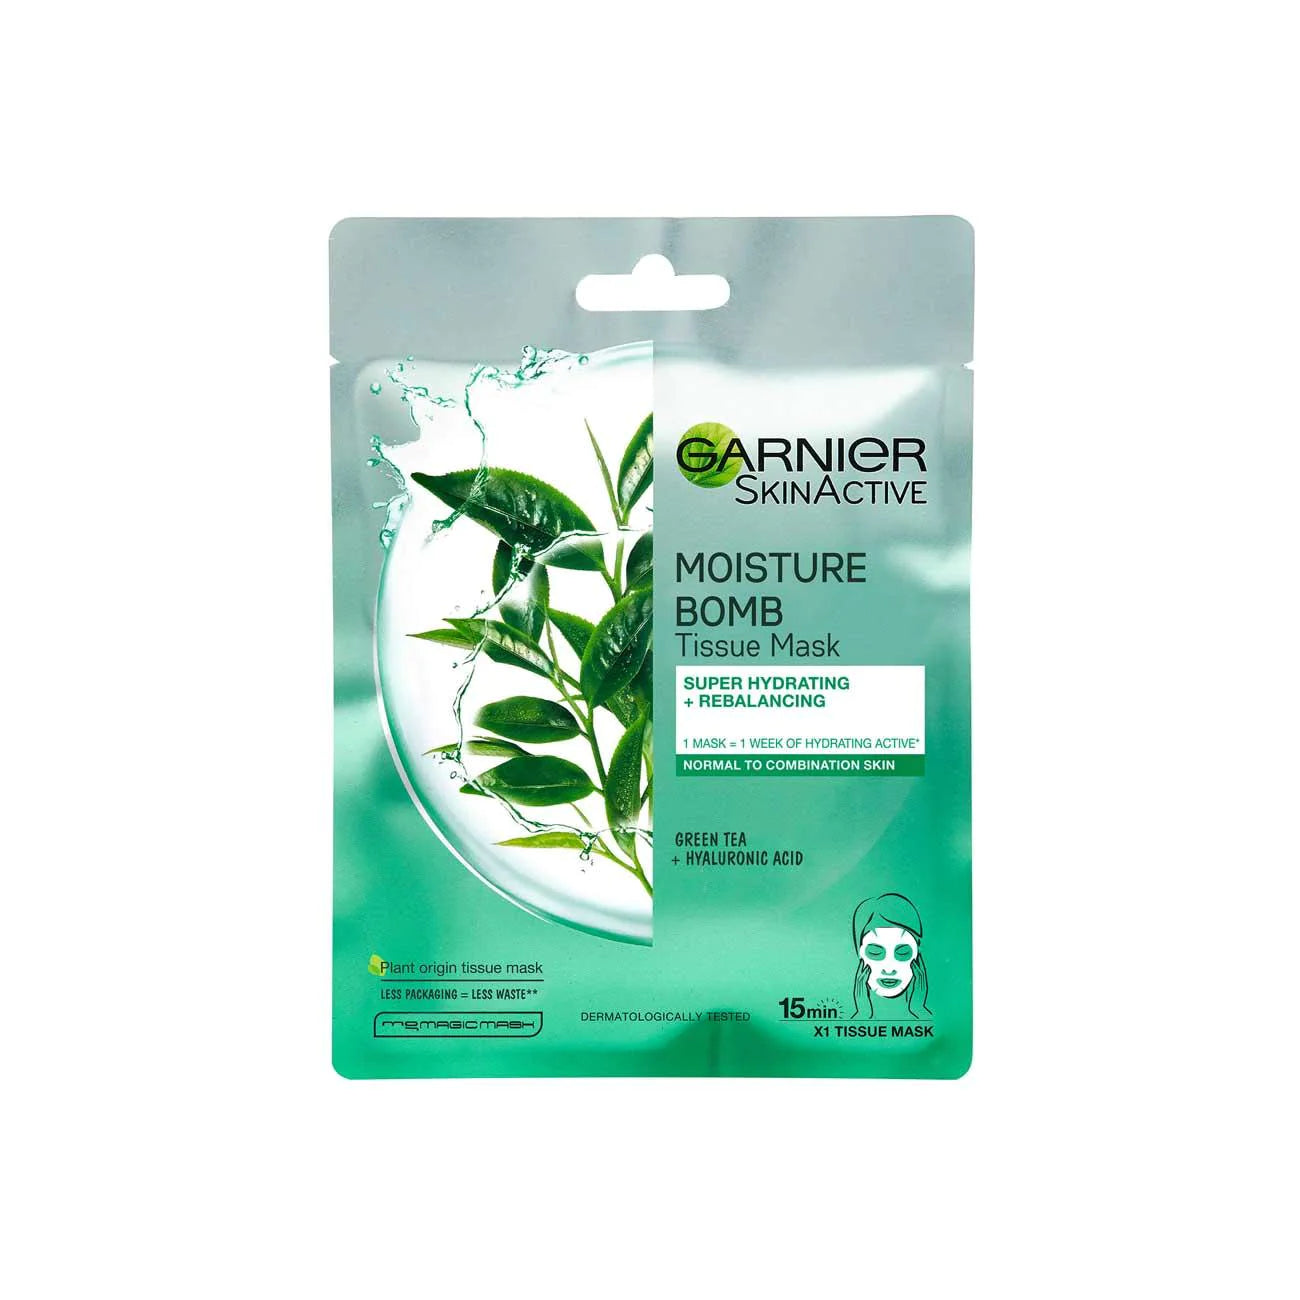 Garnier Hydra Bomb Green Tea Super-Hydrating & Rebalancing Tissue Mask for Normal to Combination Skin